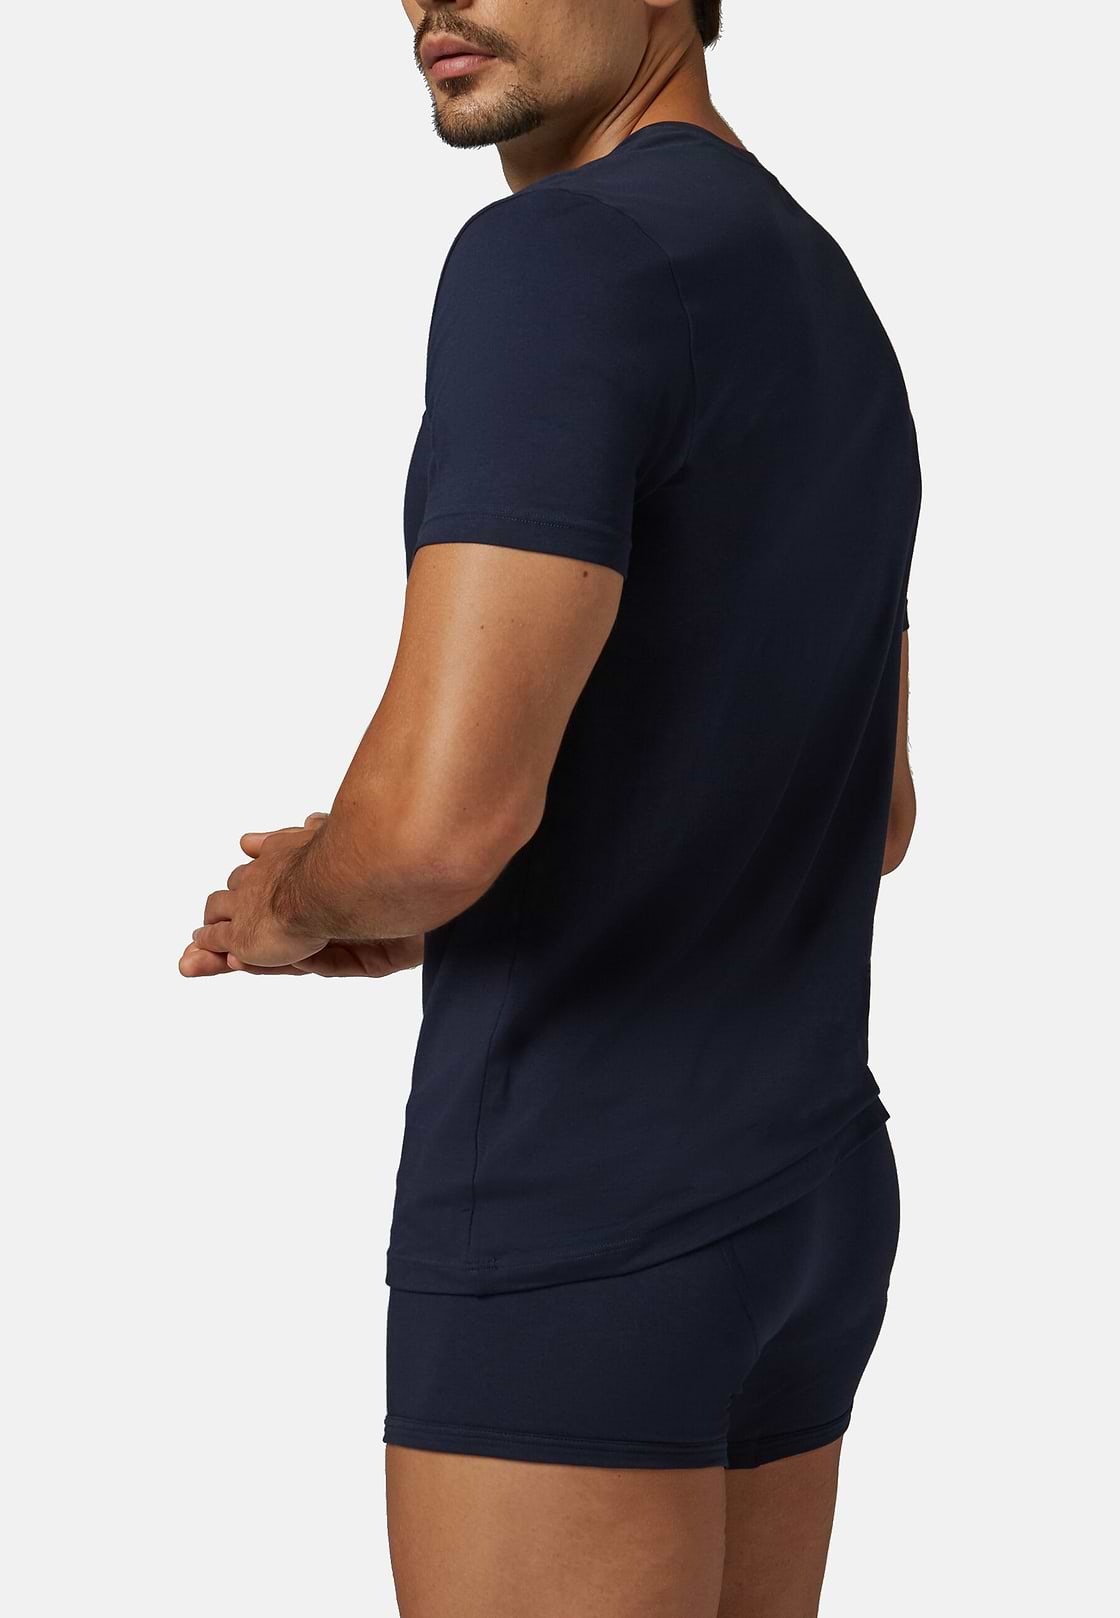 Stretch Cotton Jersey T-shirt, Navy blue, hi-res